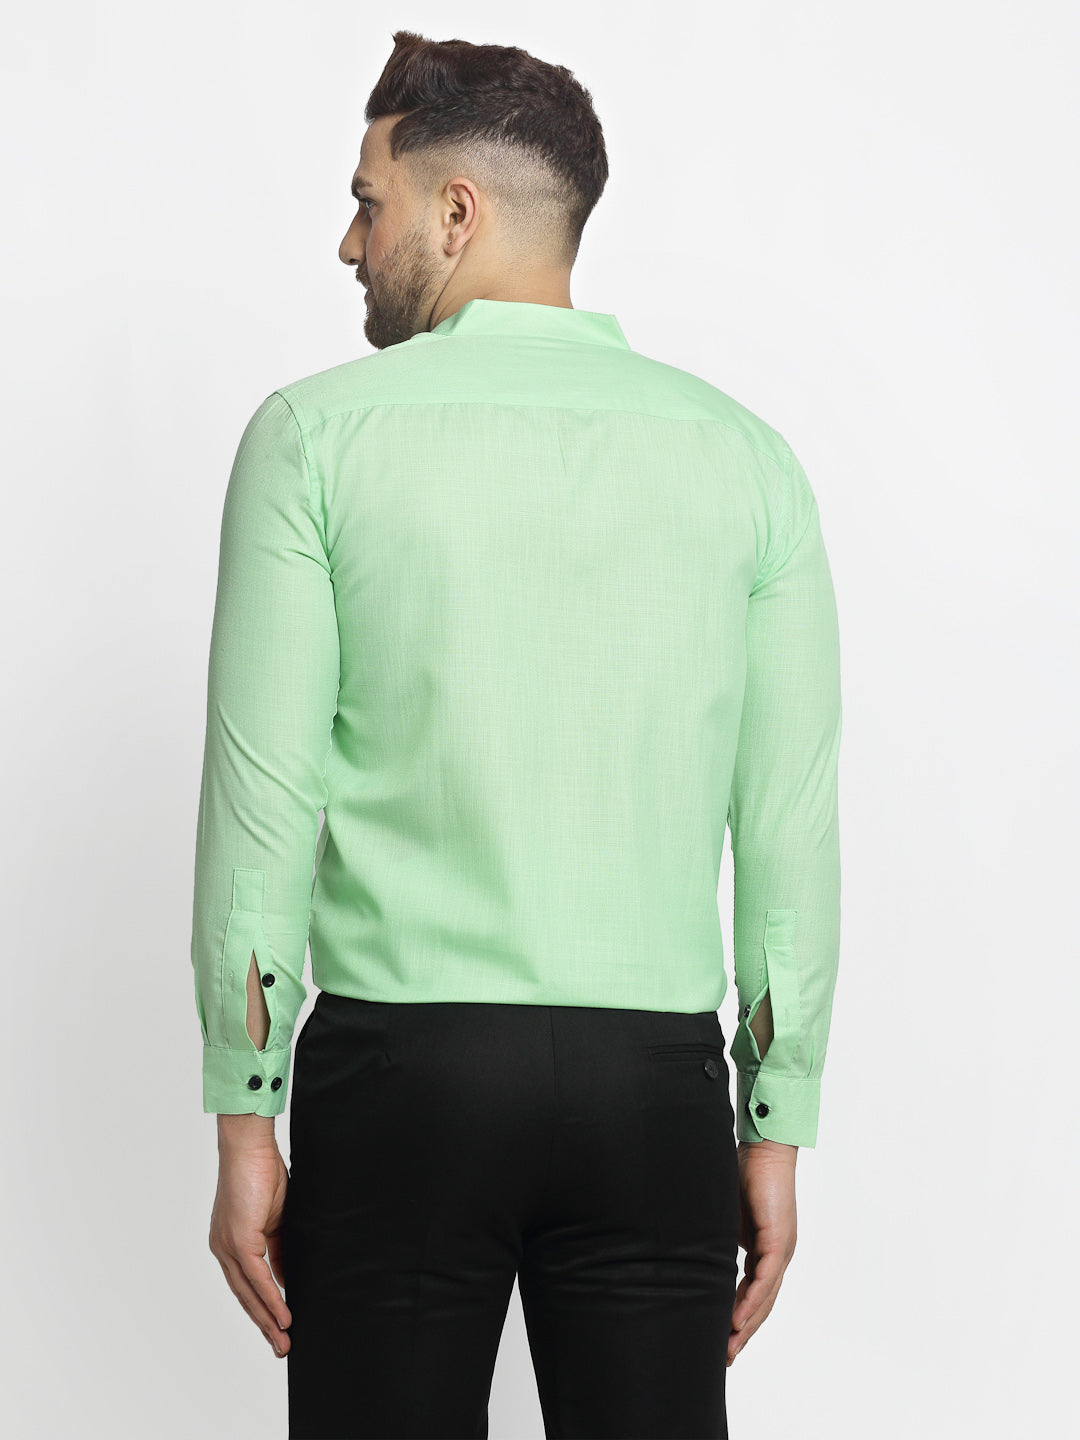 Men's Green Cotton Solid Mandarin Collar Formal Shirts ( SF 726Light-Green ) - Jainish